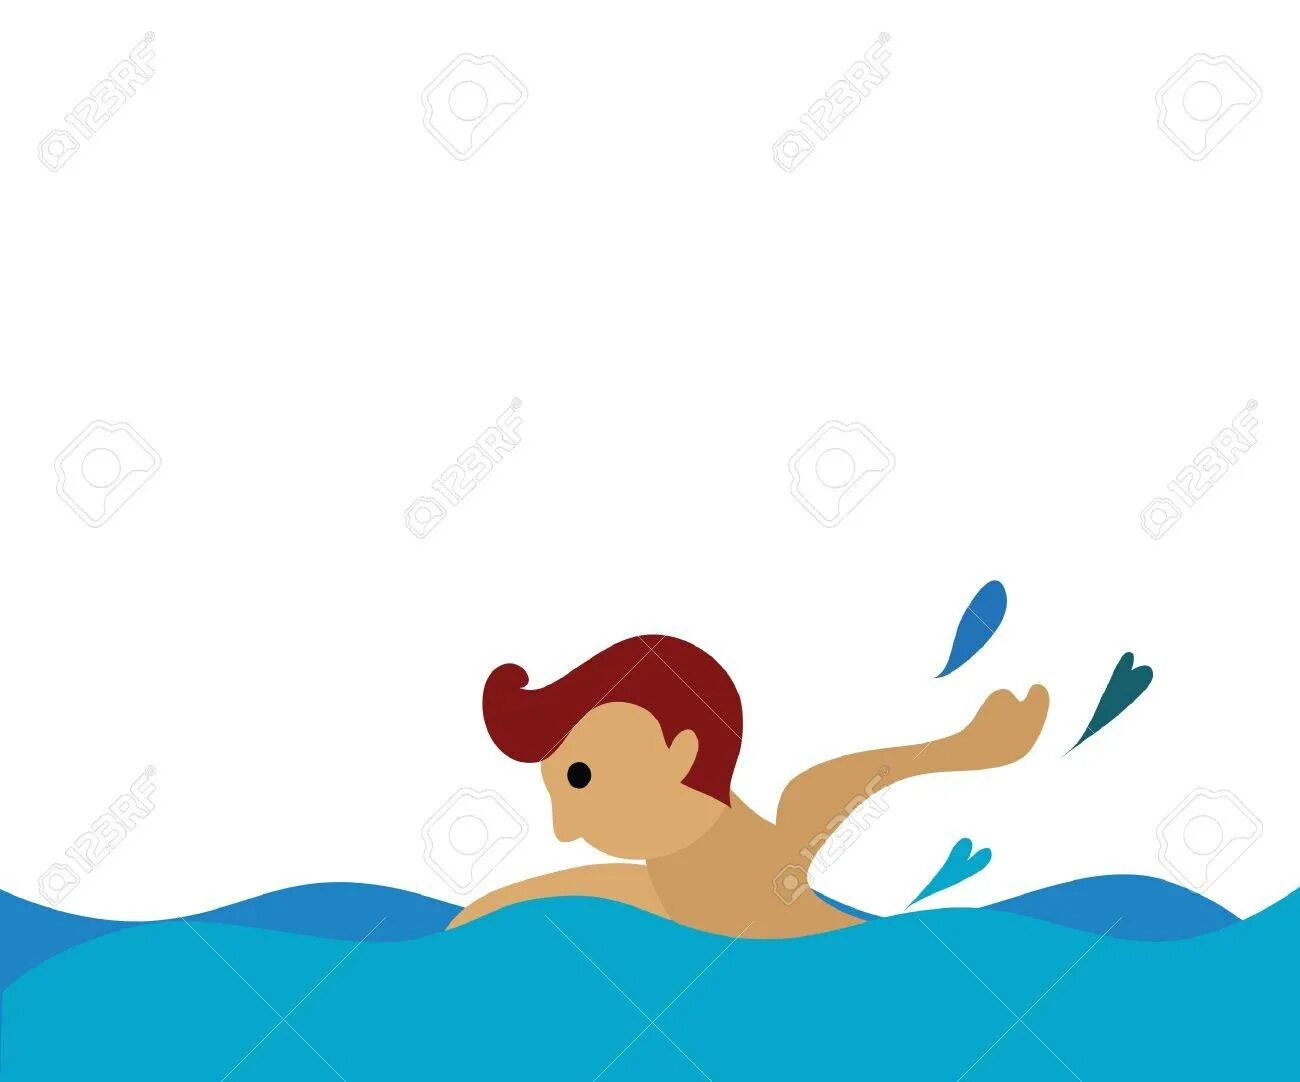 He will swim. Картинки связанные с плаваньем для детей. Ребенок плавает с кругом рисунок. He is swimming. He can Swim.